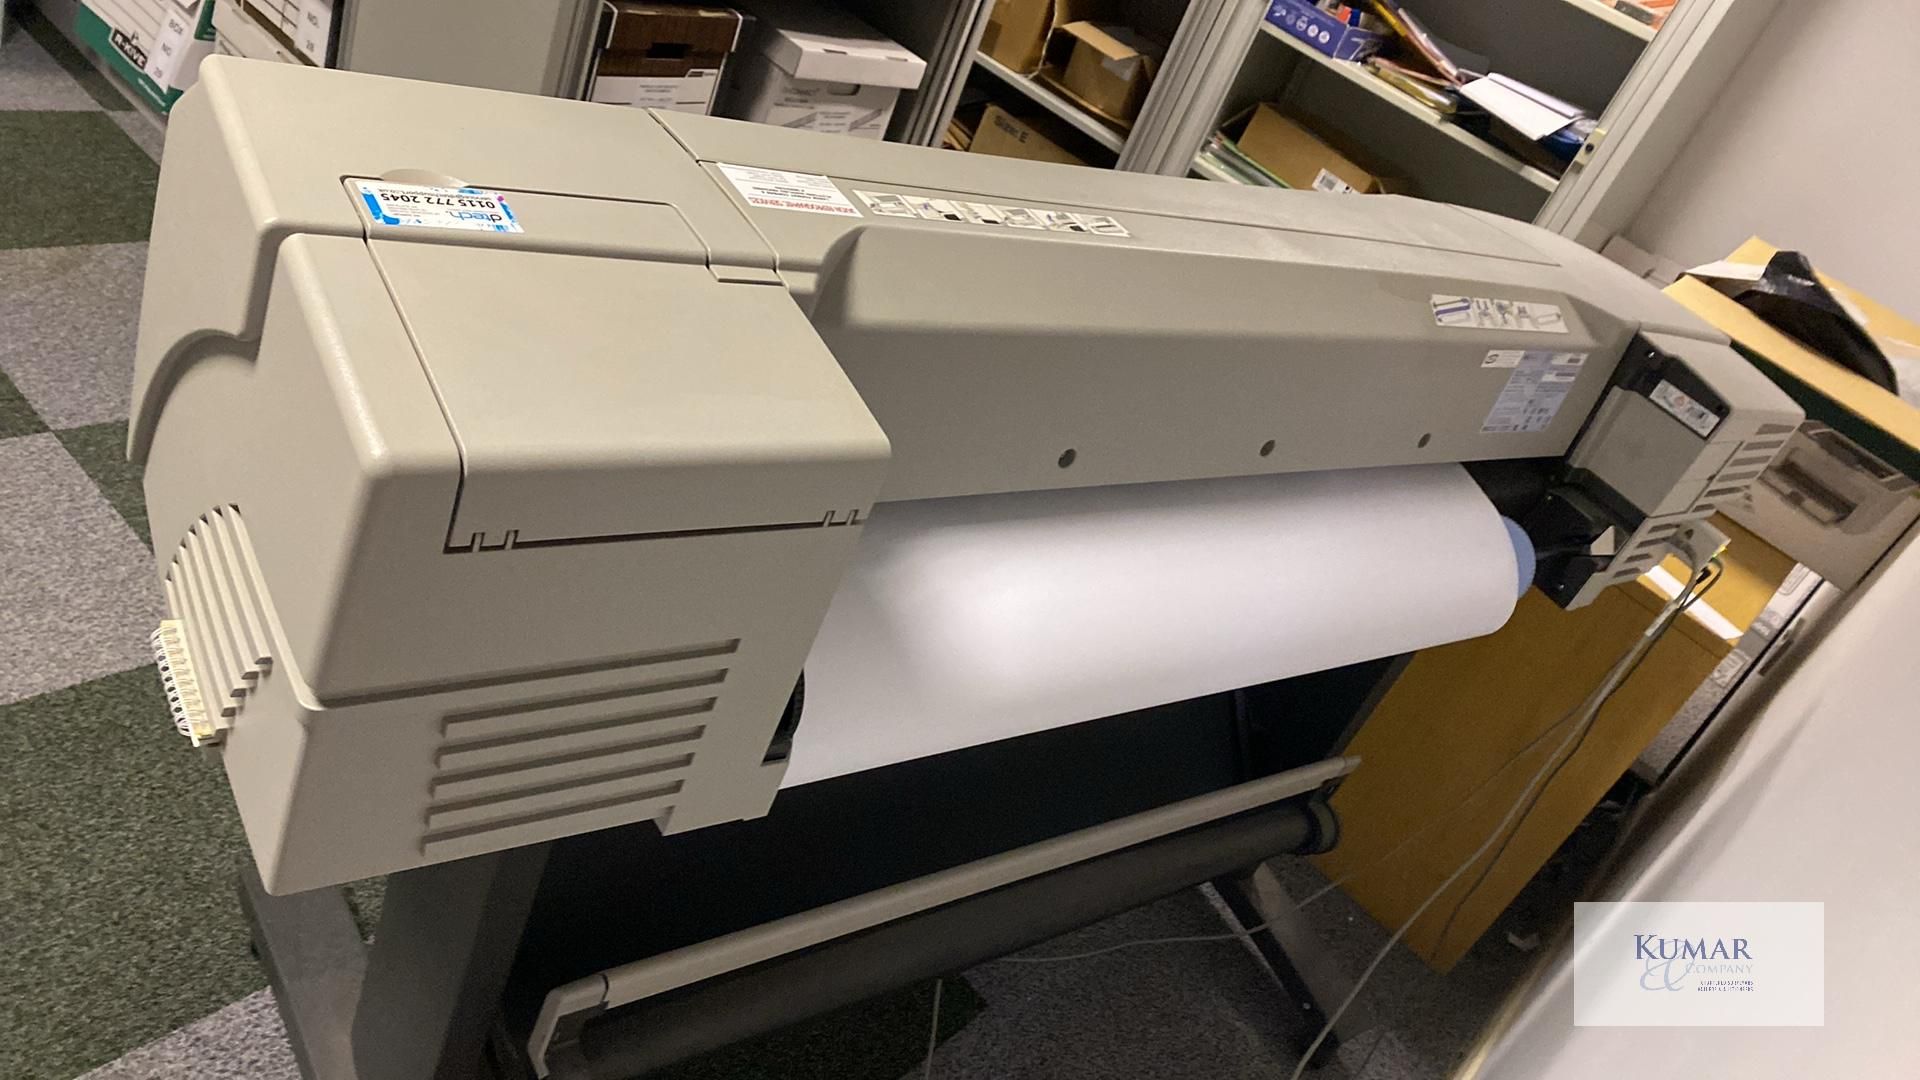 HP Design Jet 500 Plans Printer - Image 4 of 7